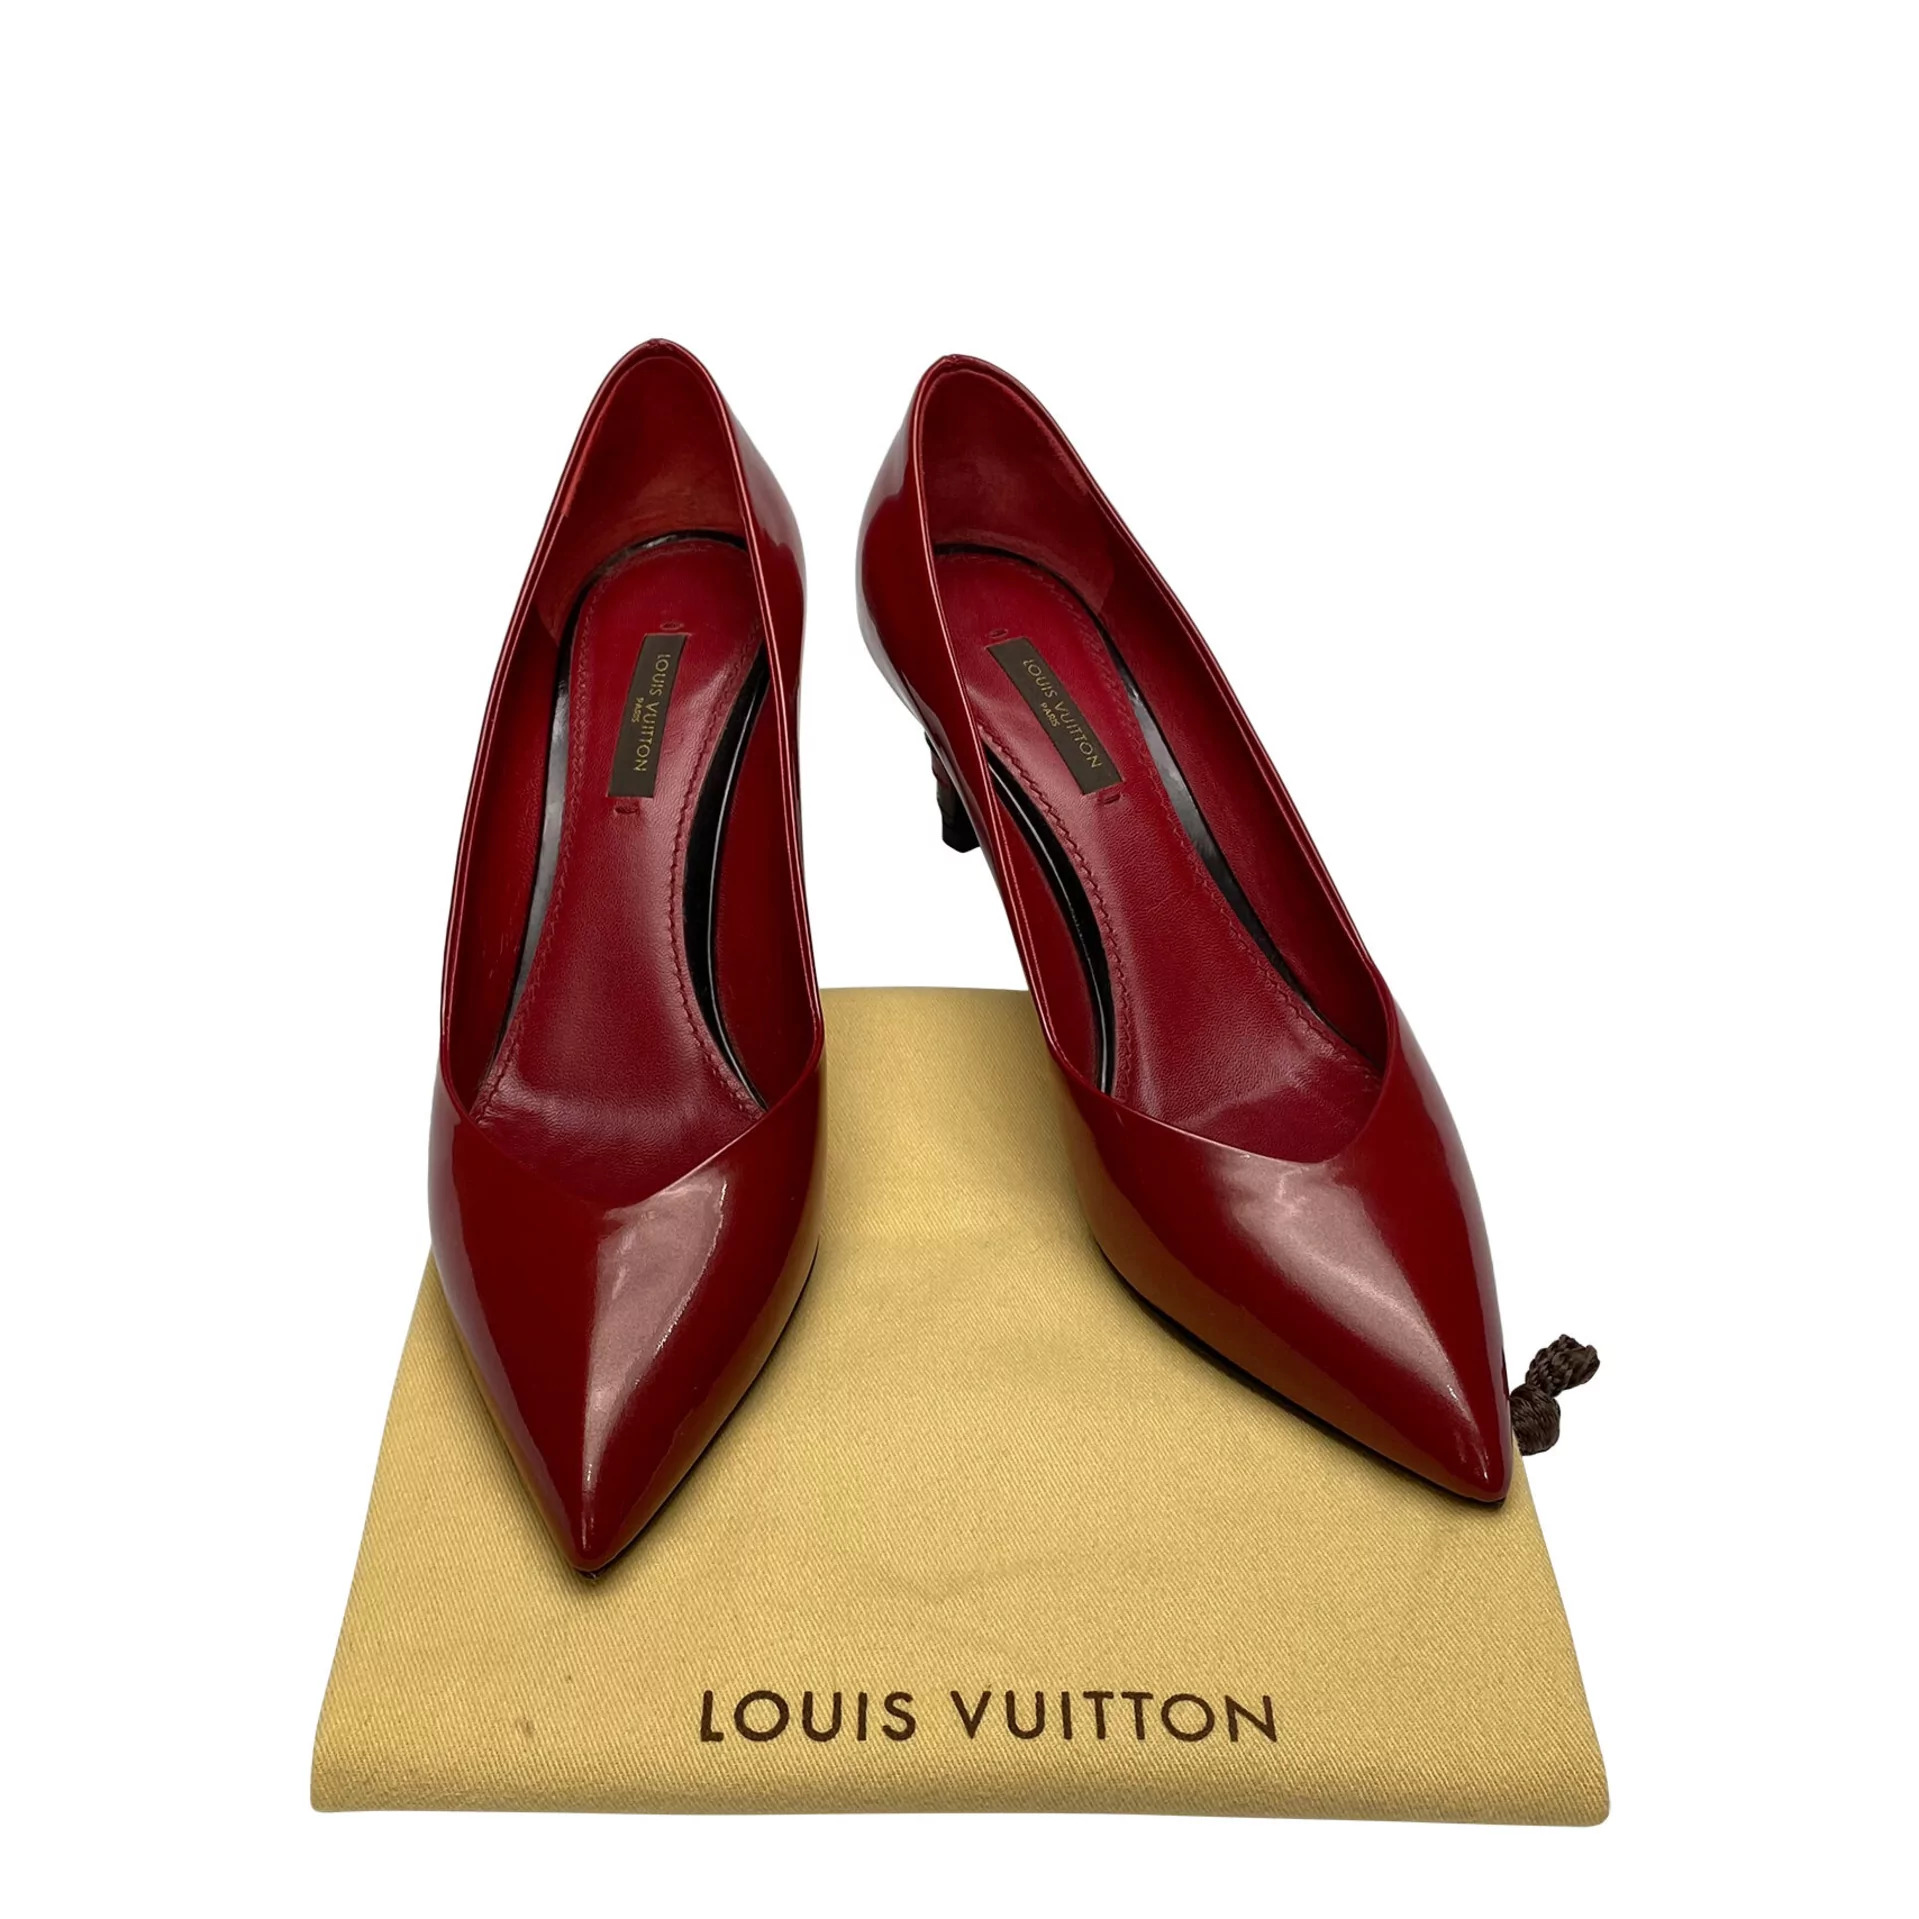 Scarpin Louis Vuitton Couro Vermelho